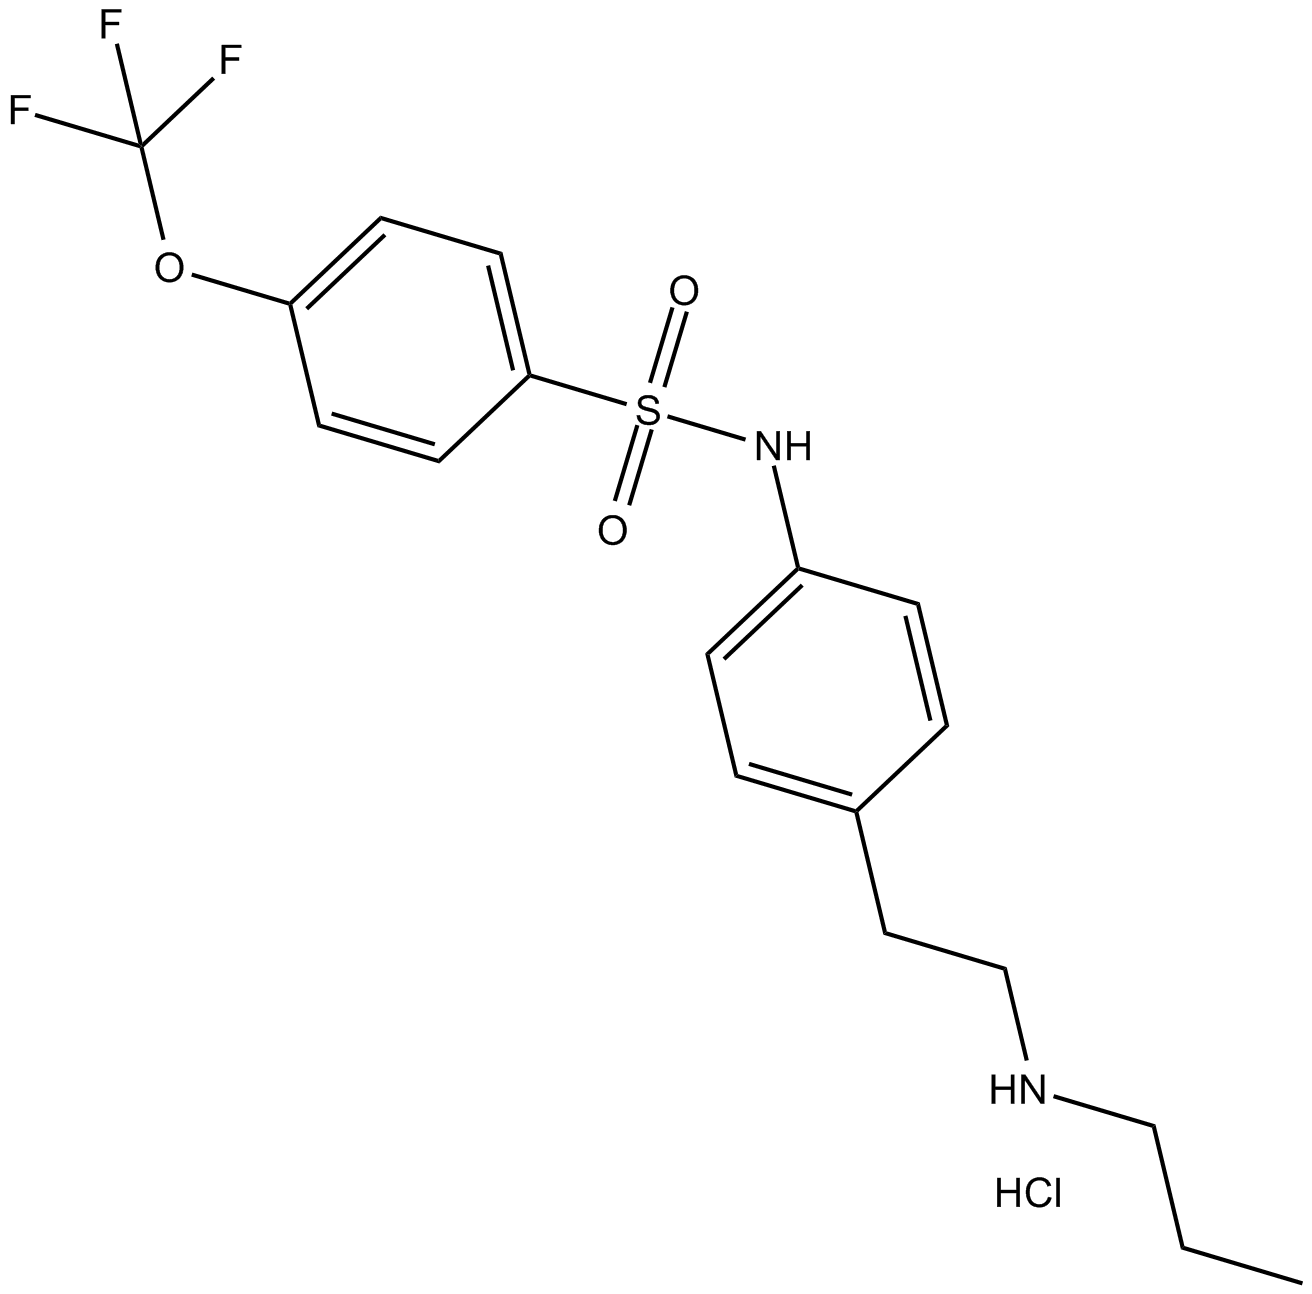 PNU 177864 hydrochloride